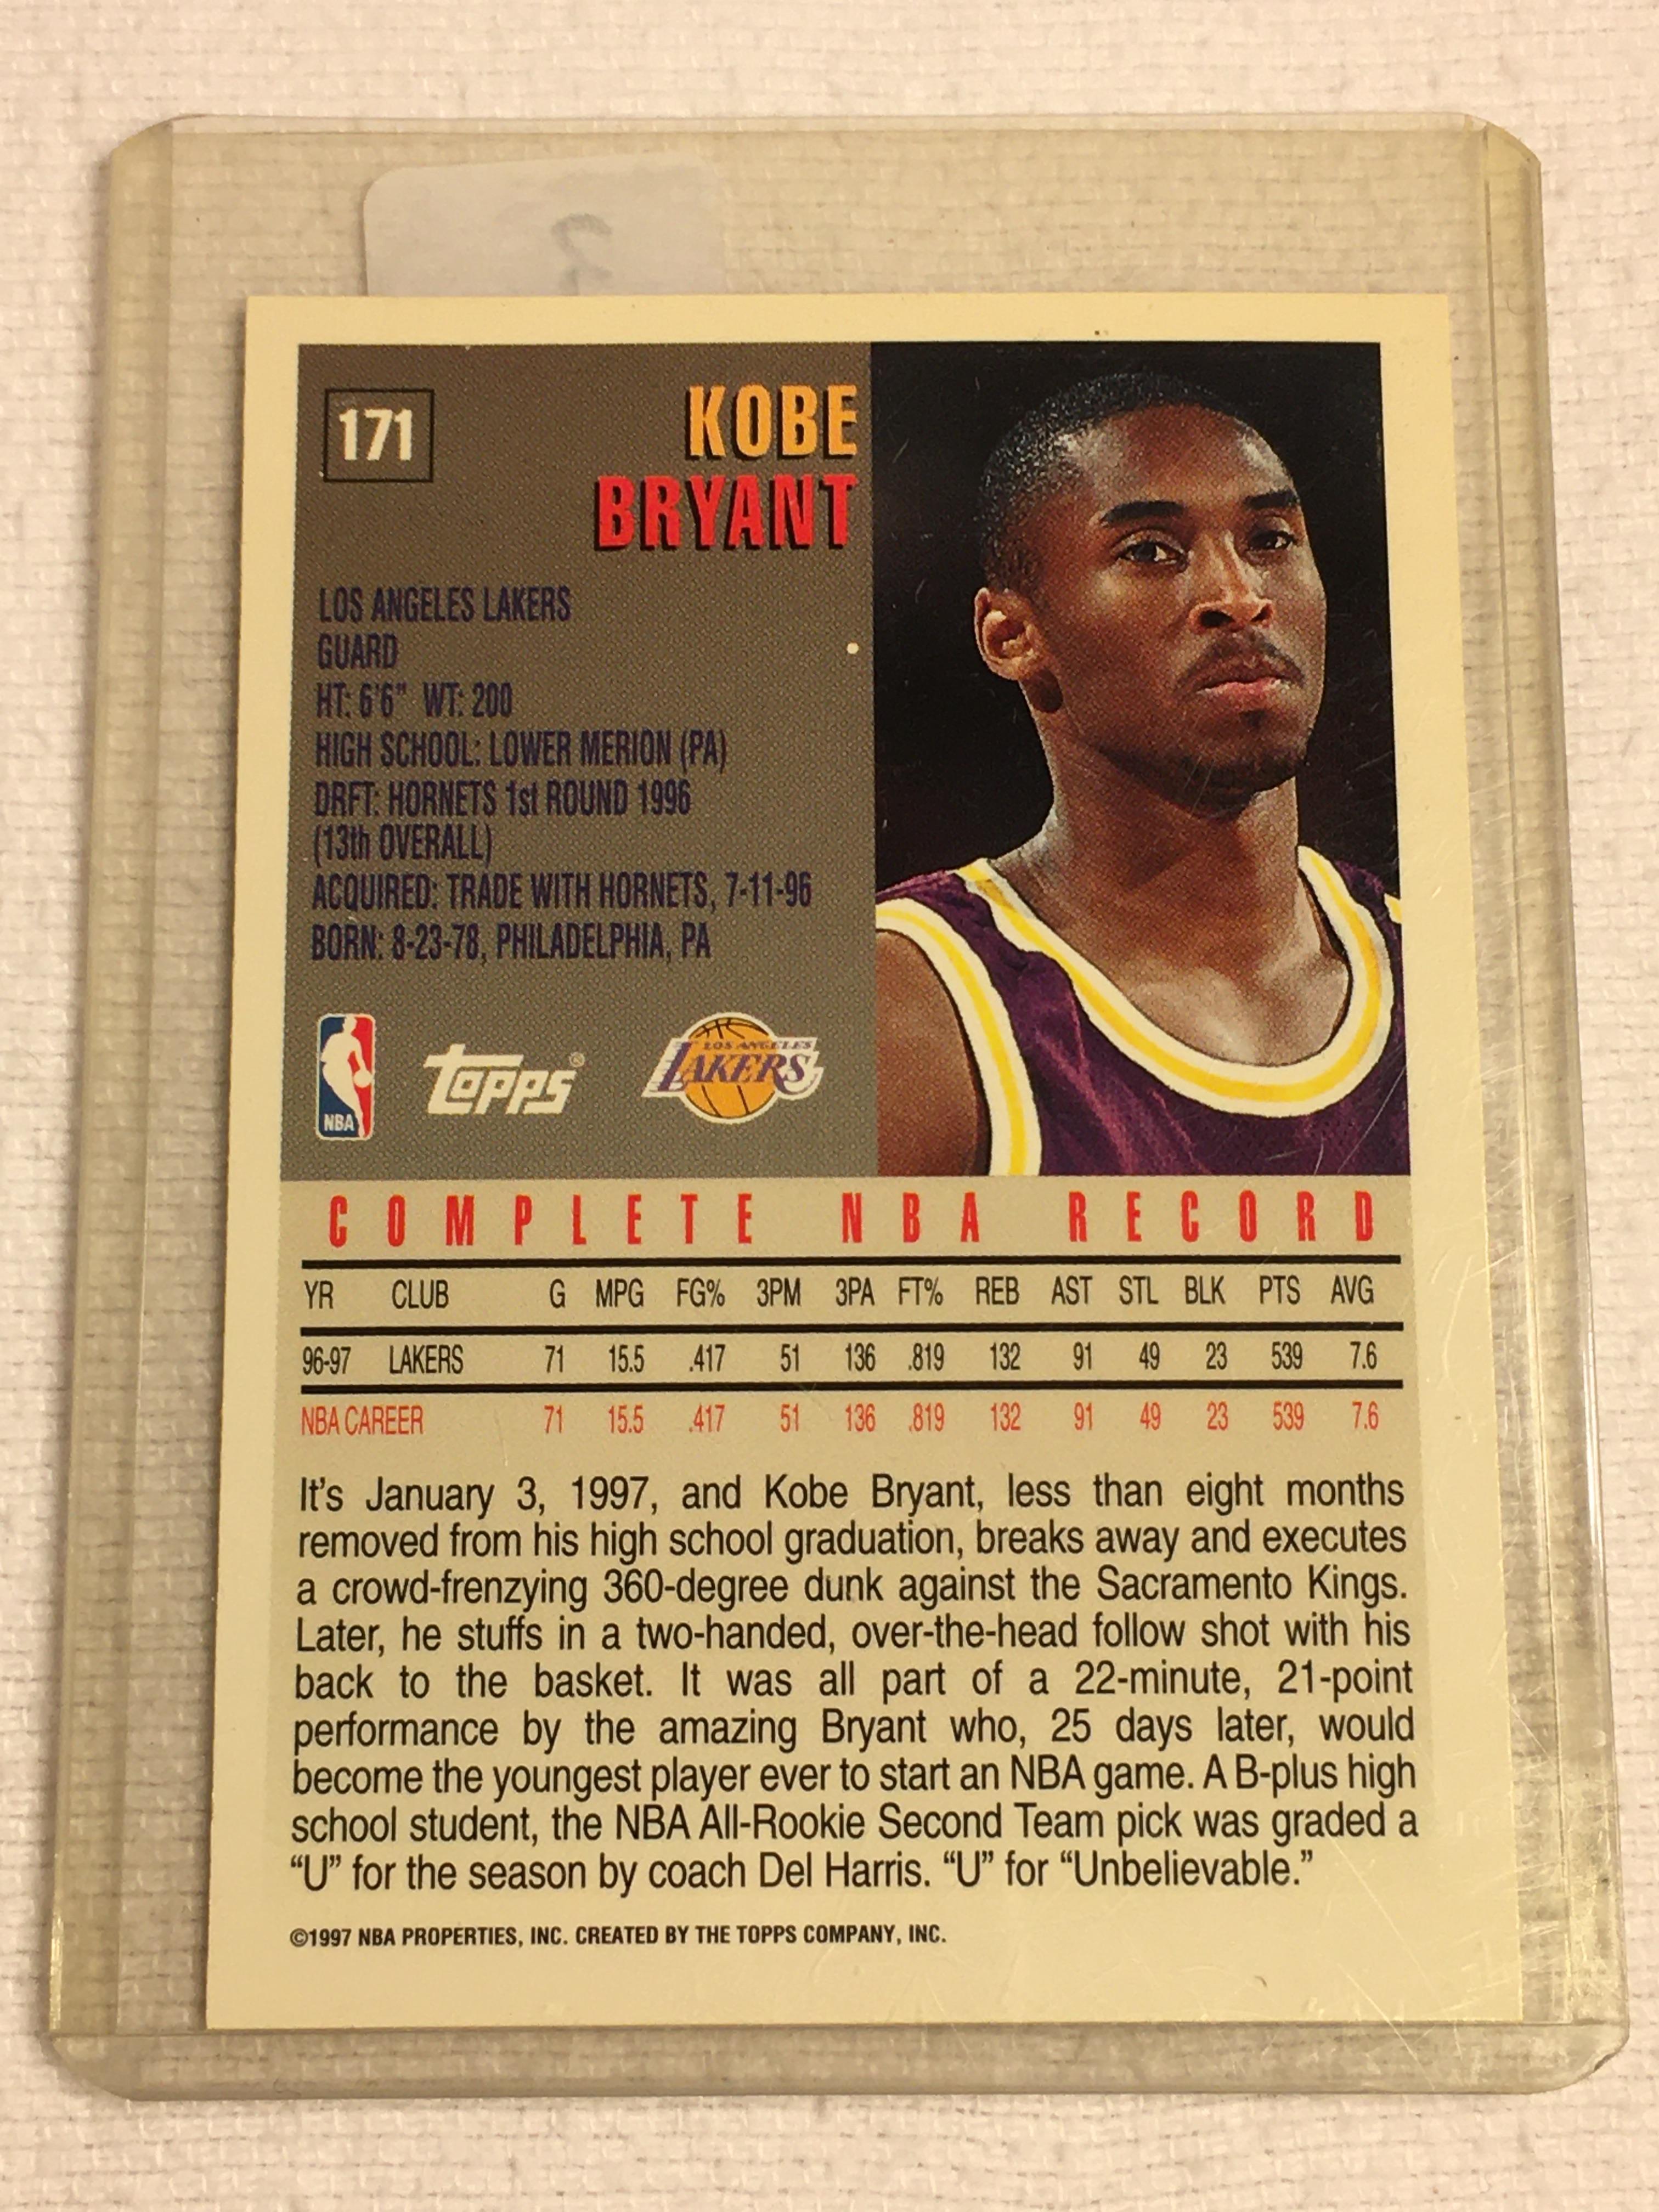 Collector 1997 Topps LA Lakers Kobe Bryant Basketball Card No. 171